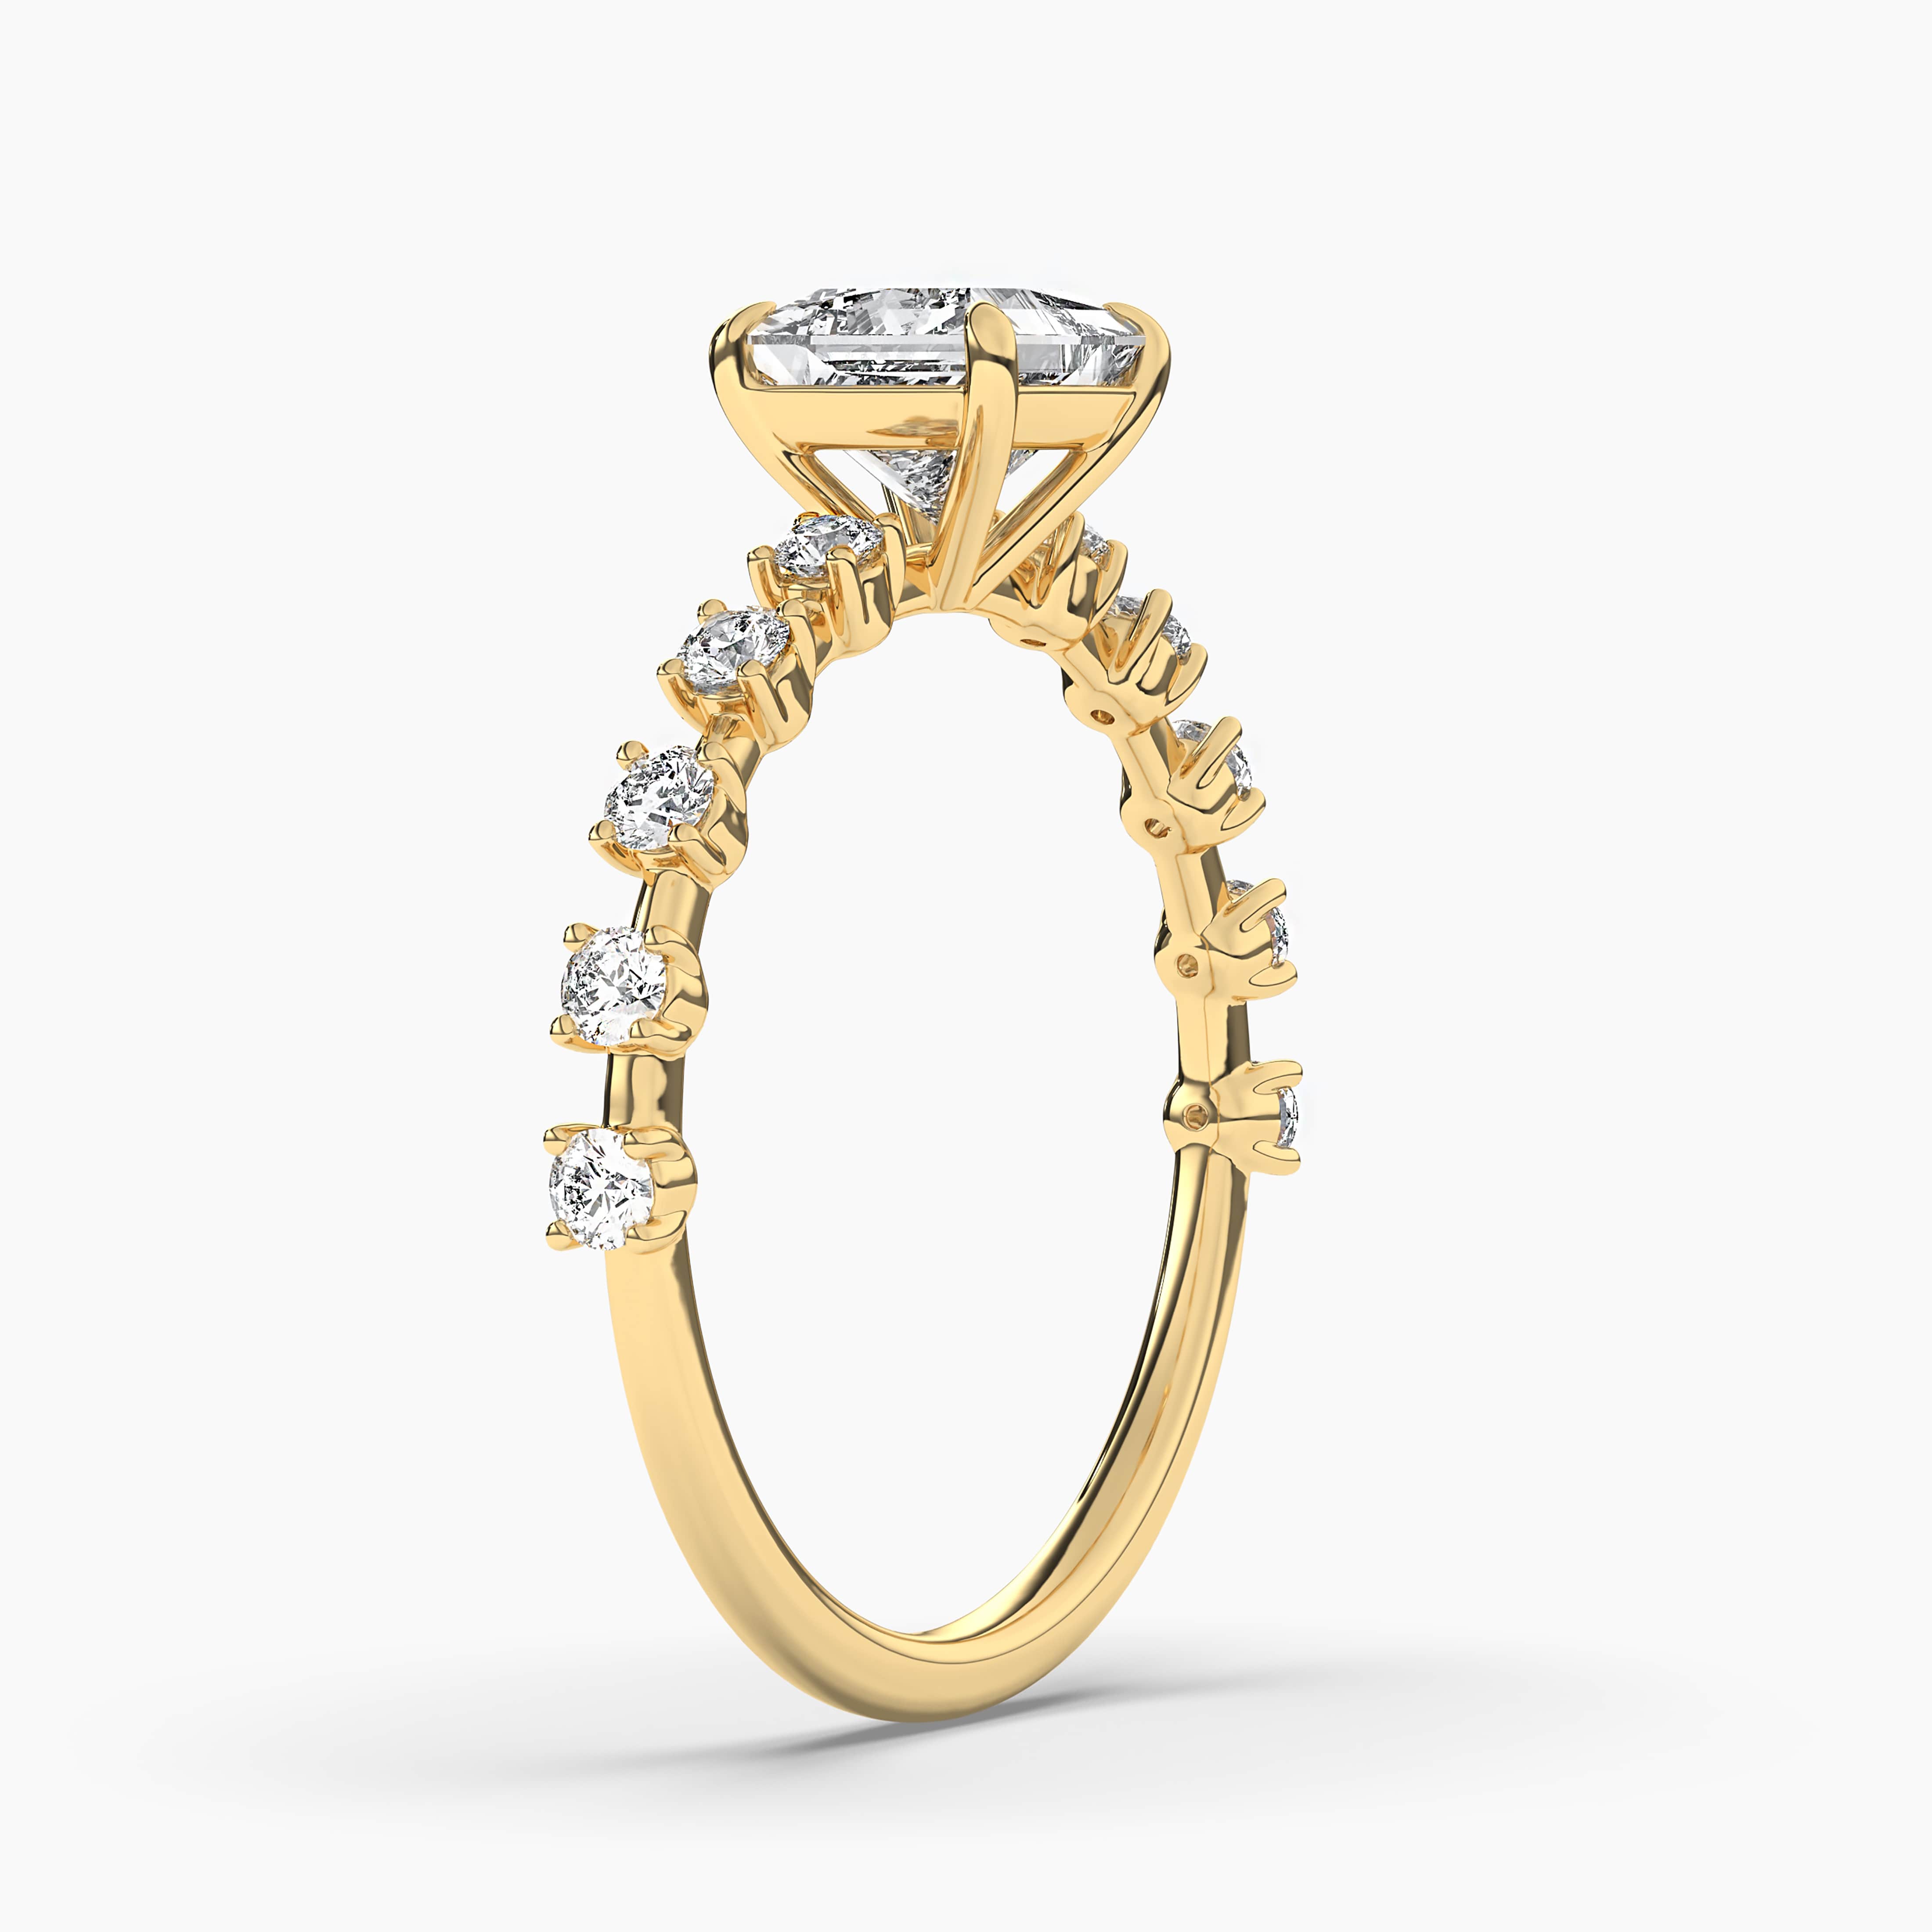 Princess Cut Diamond Solitaire Engagement Ring with Pave Diamonds